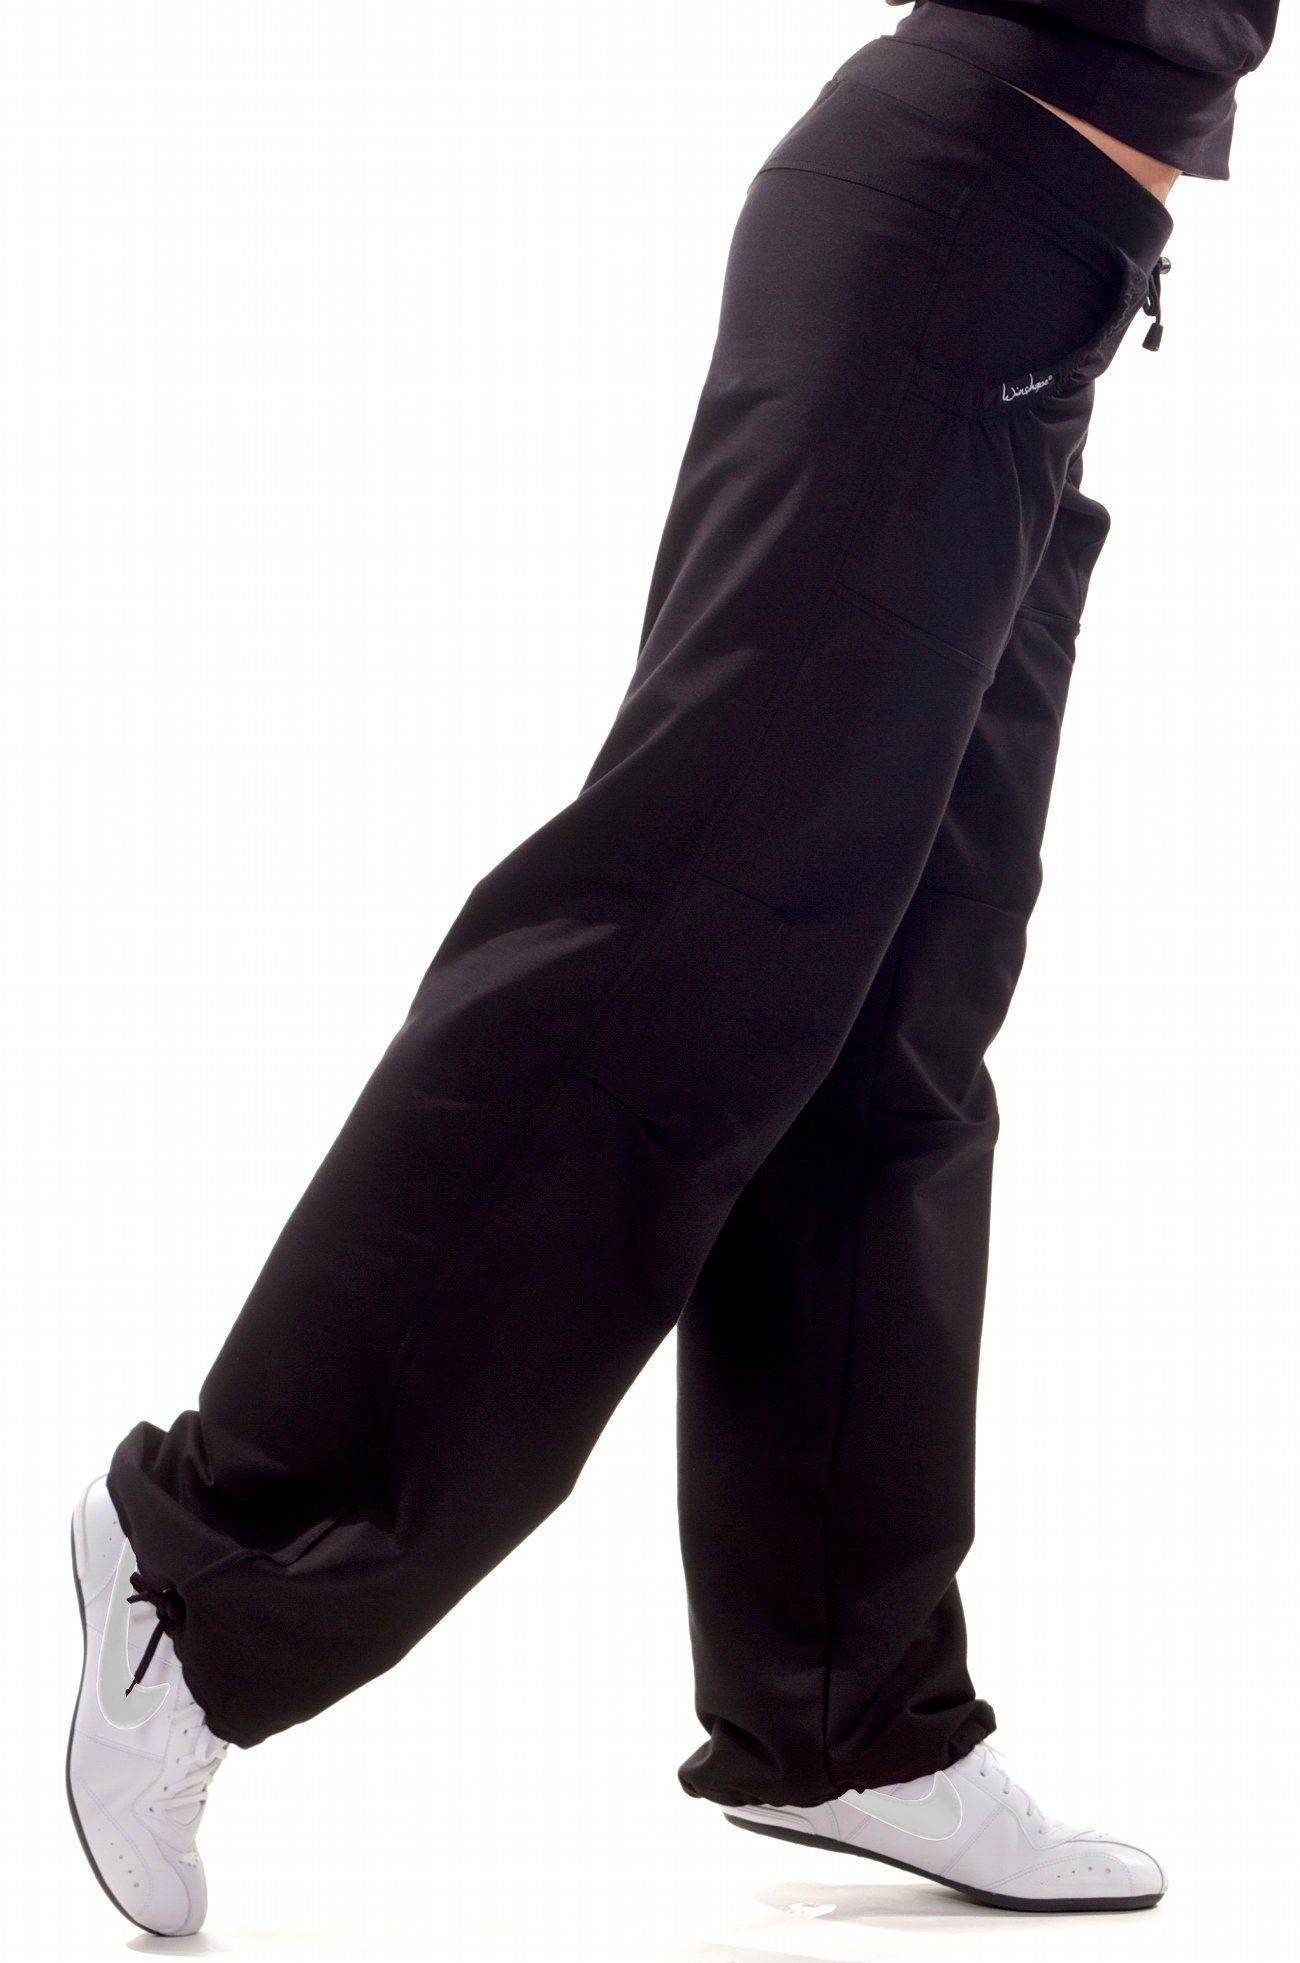 Style Sporthose schwarz All-Fit WTE9 Winshape